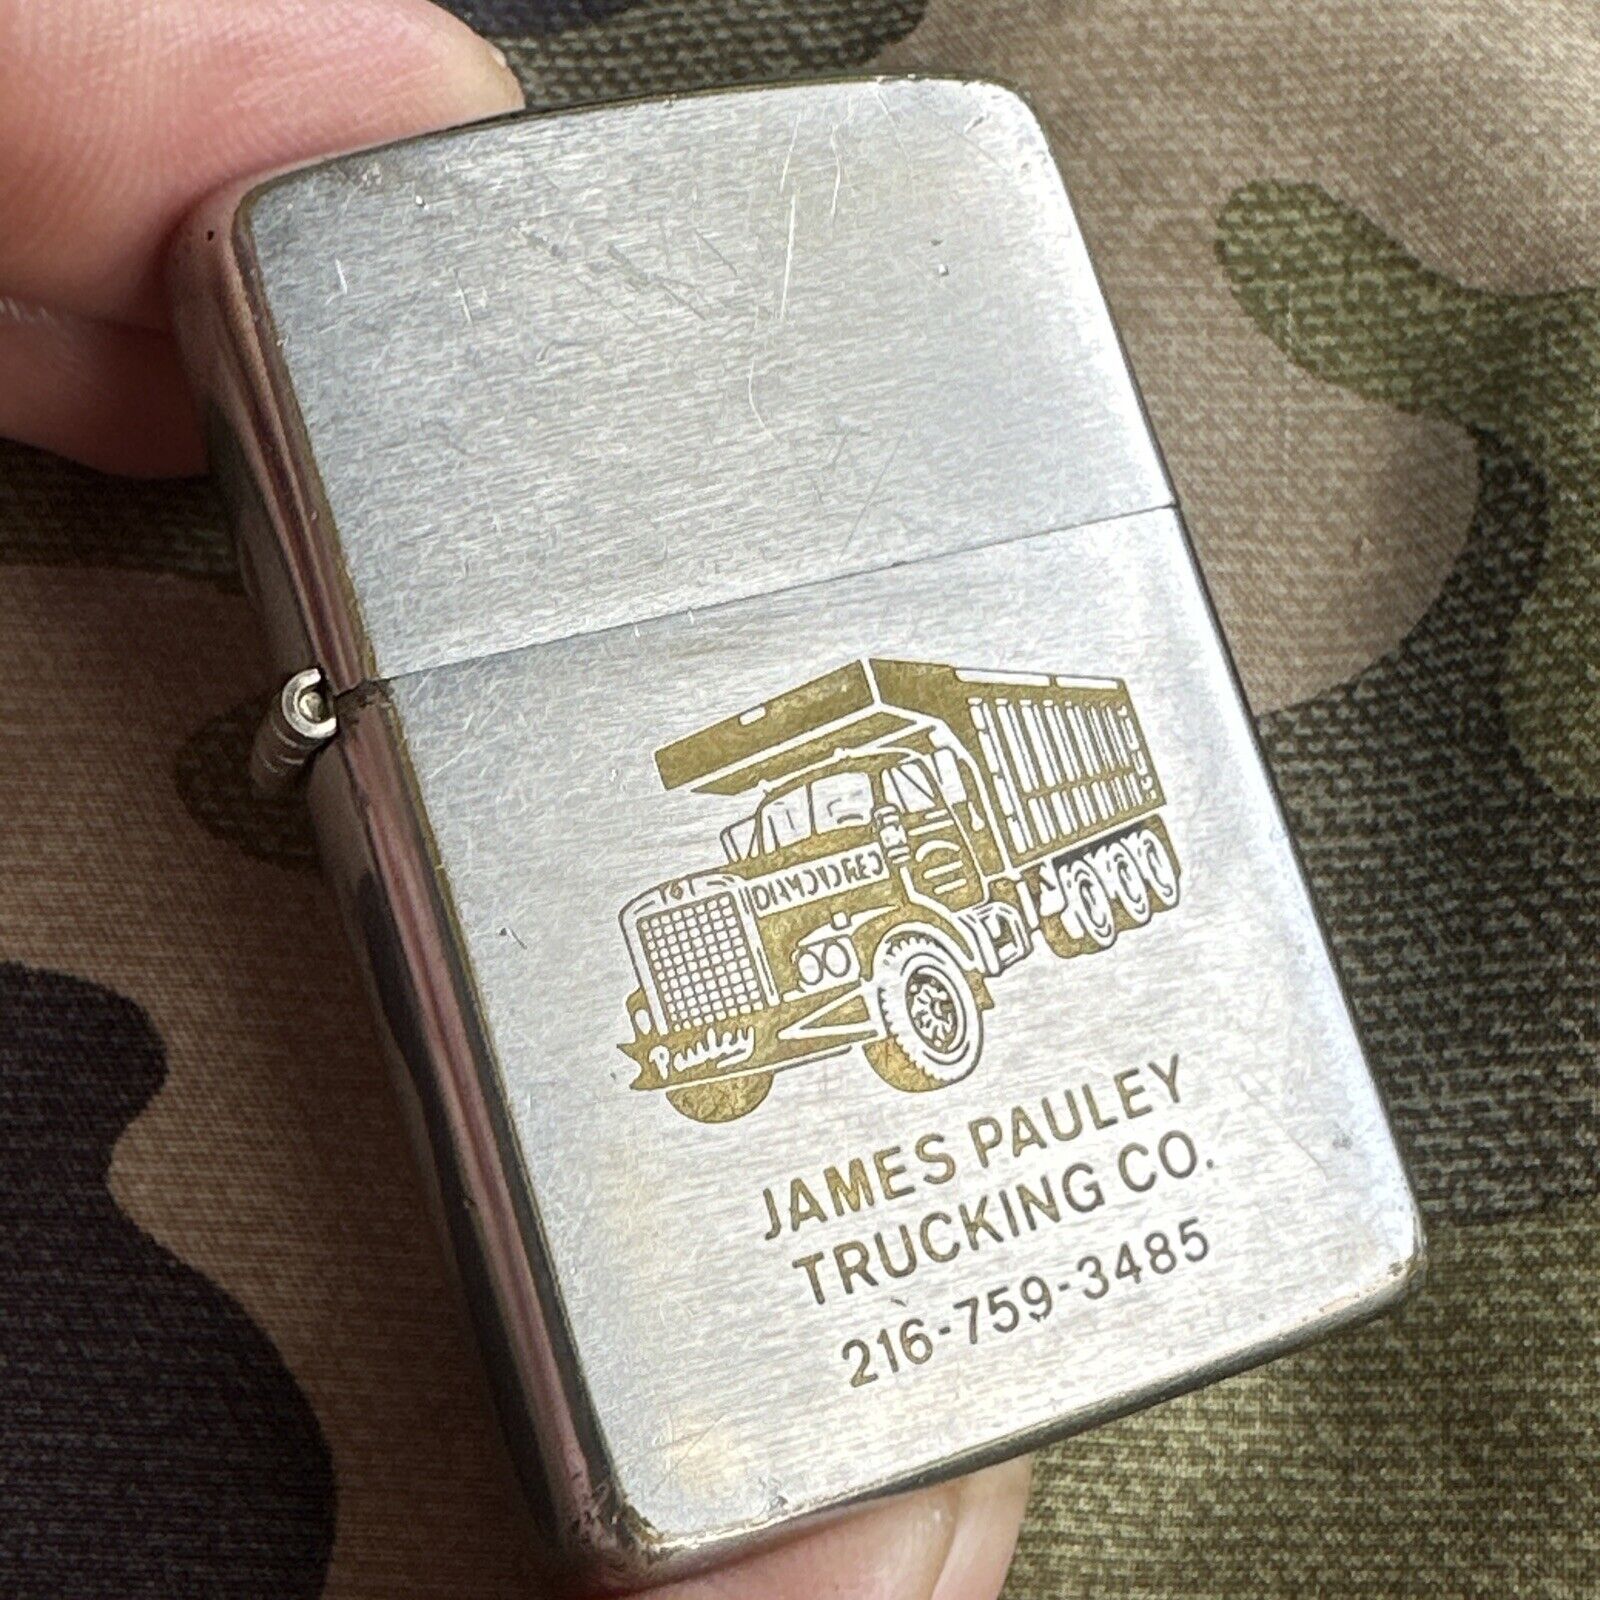 1981 Vintage Zippo Lighter - James Pauley Trucking Company - Ohio